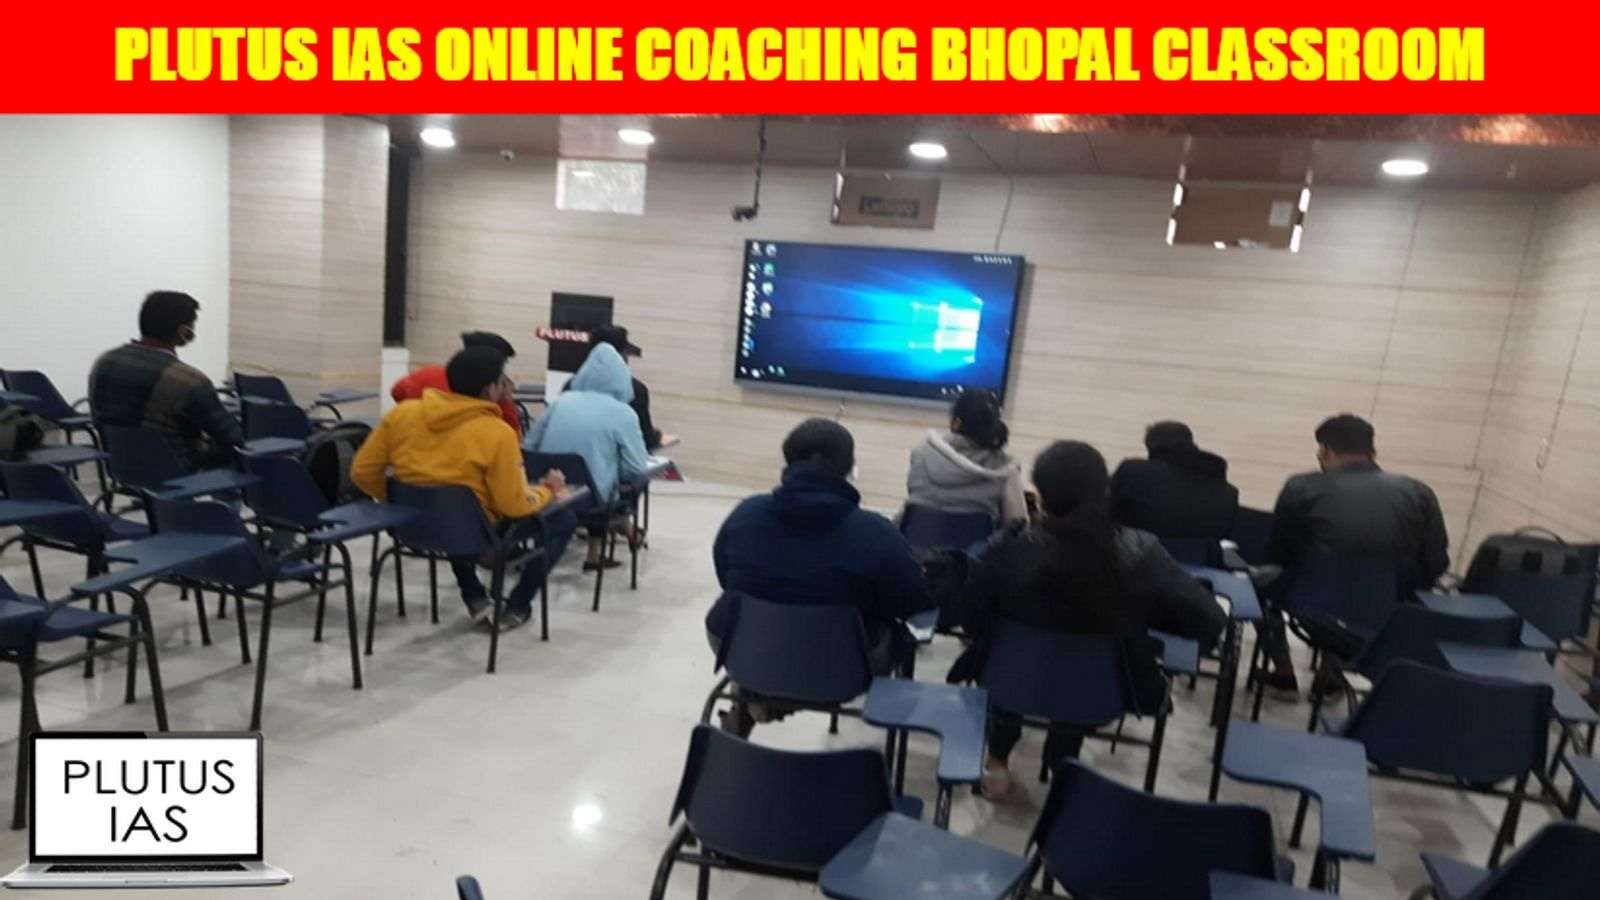 Plutus IAS Online Coaching Bhopal Class Room